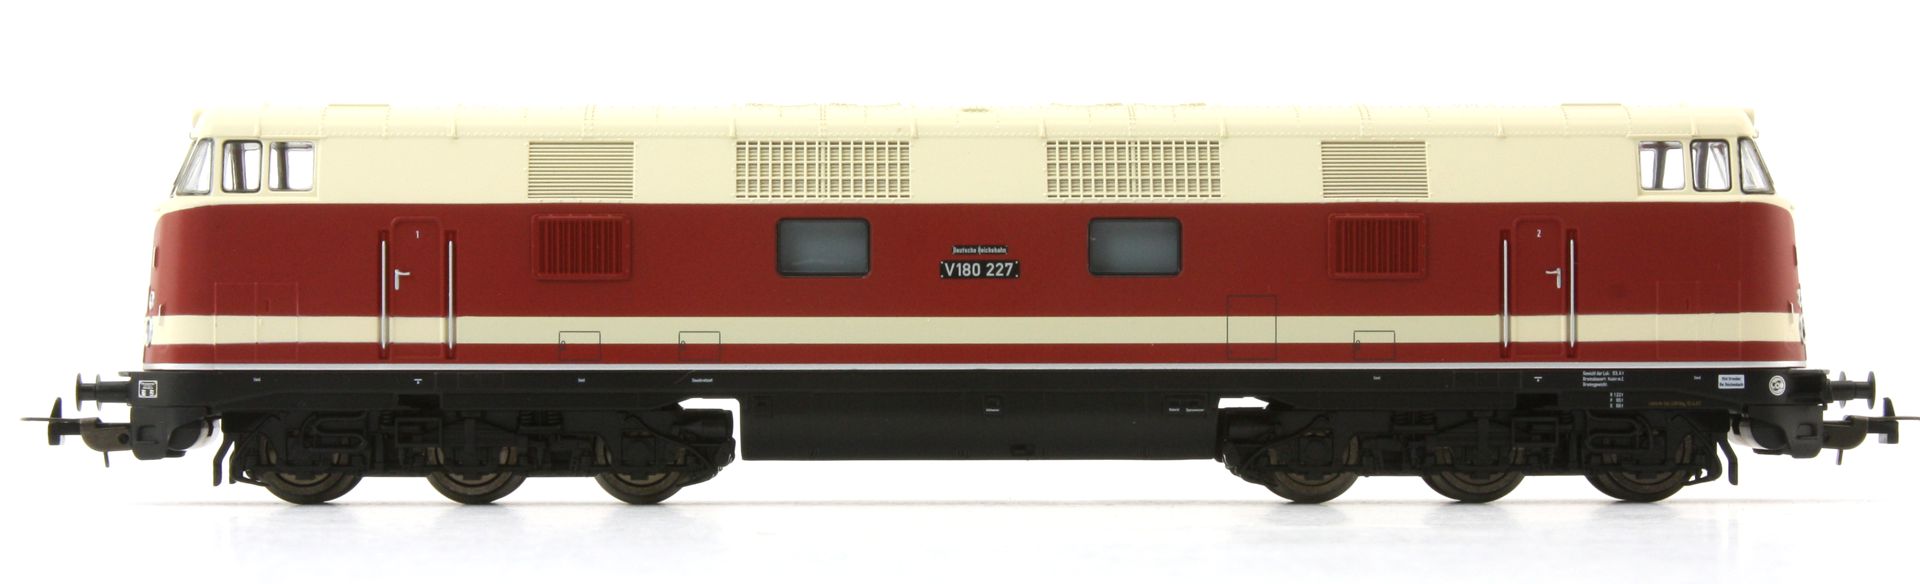 Piko 59587-5 - Diesellok V 180 227, DR, Ep.III